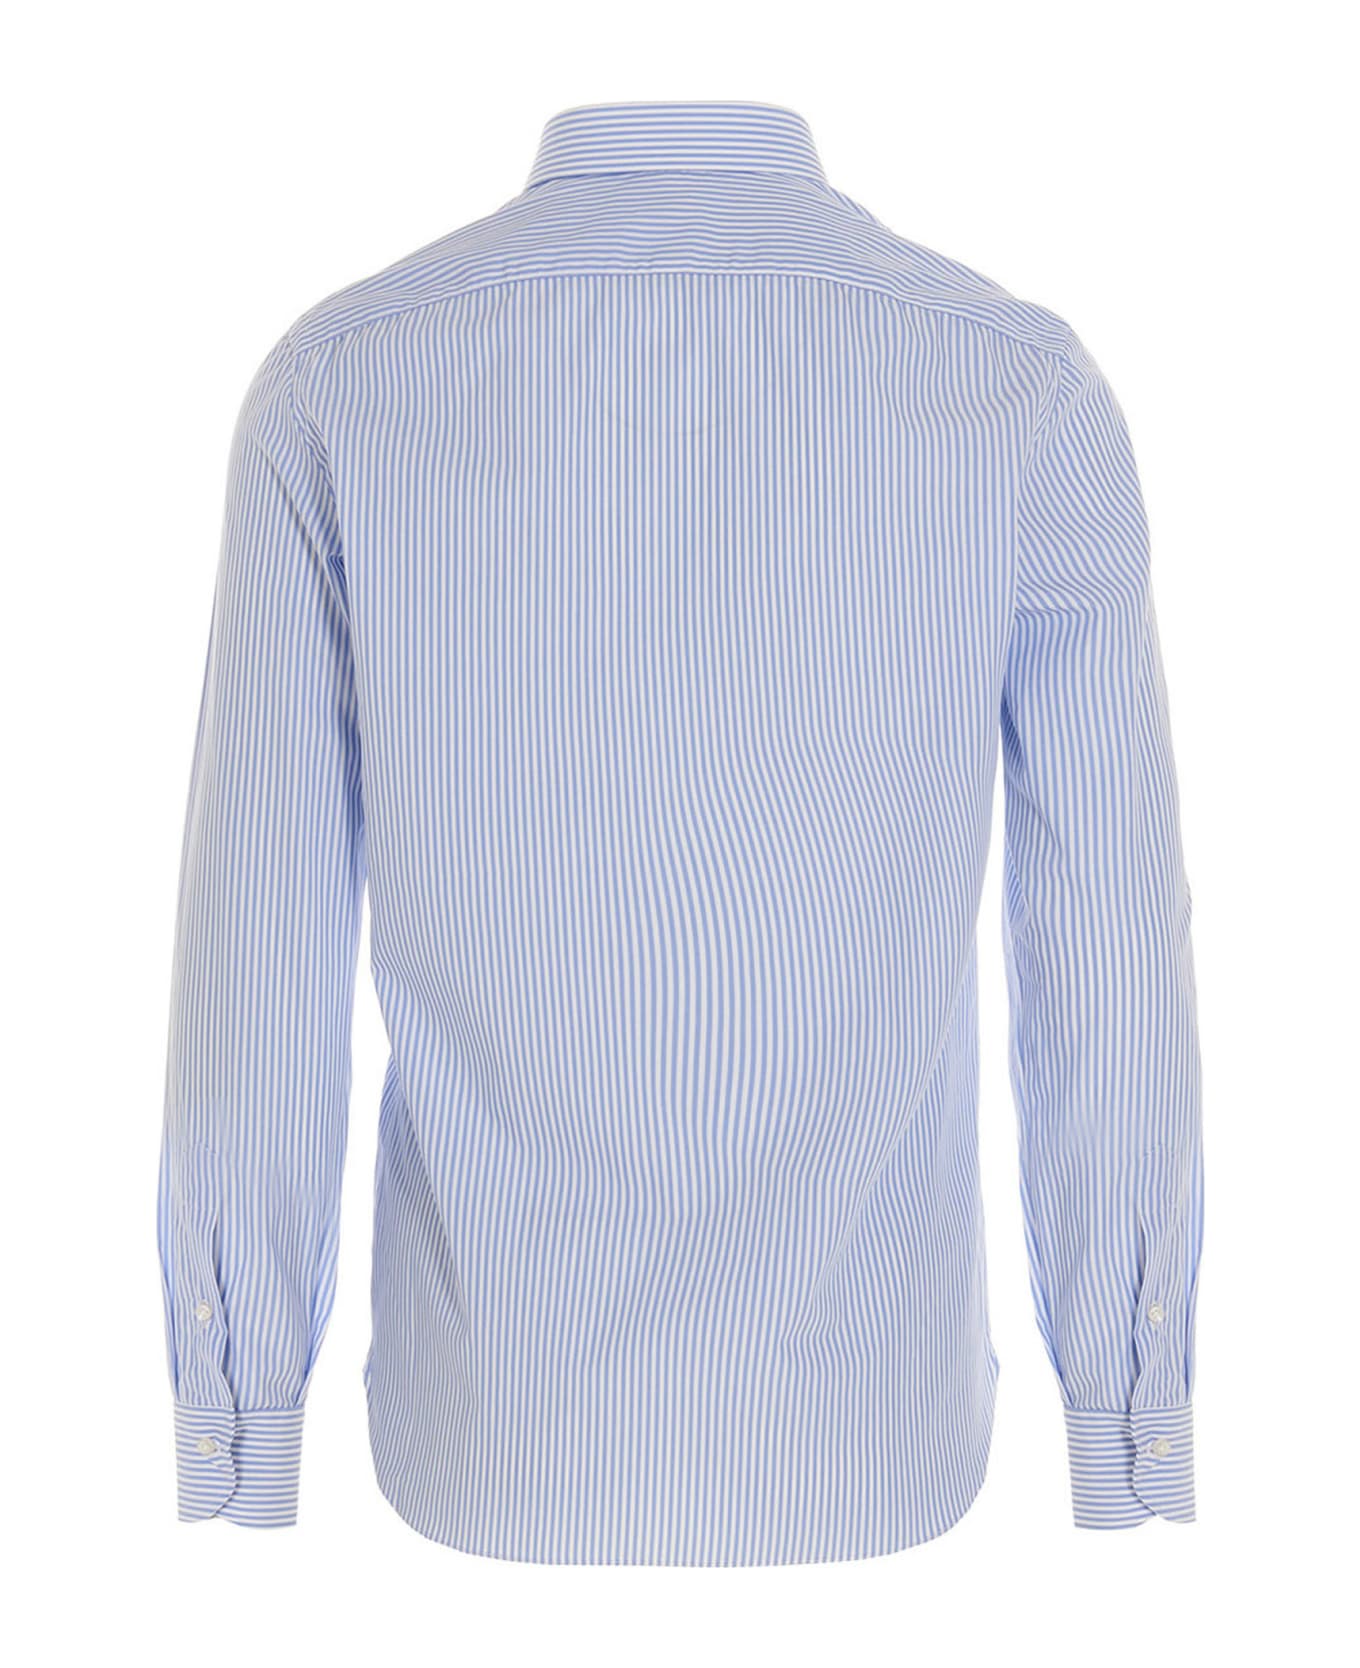 Borriello Napoli Striped Shirt - Light Blue